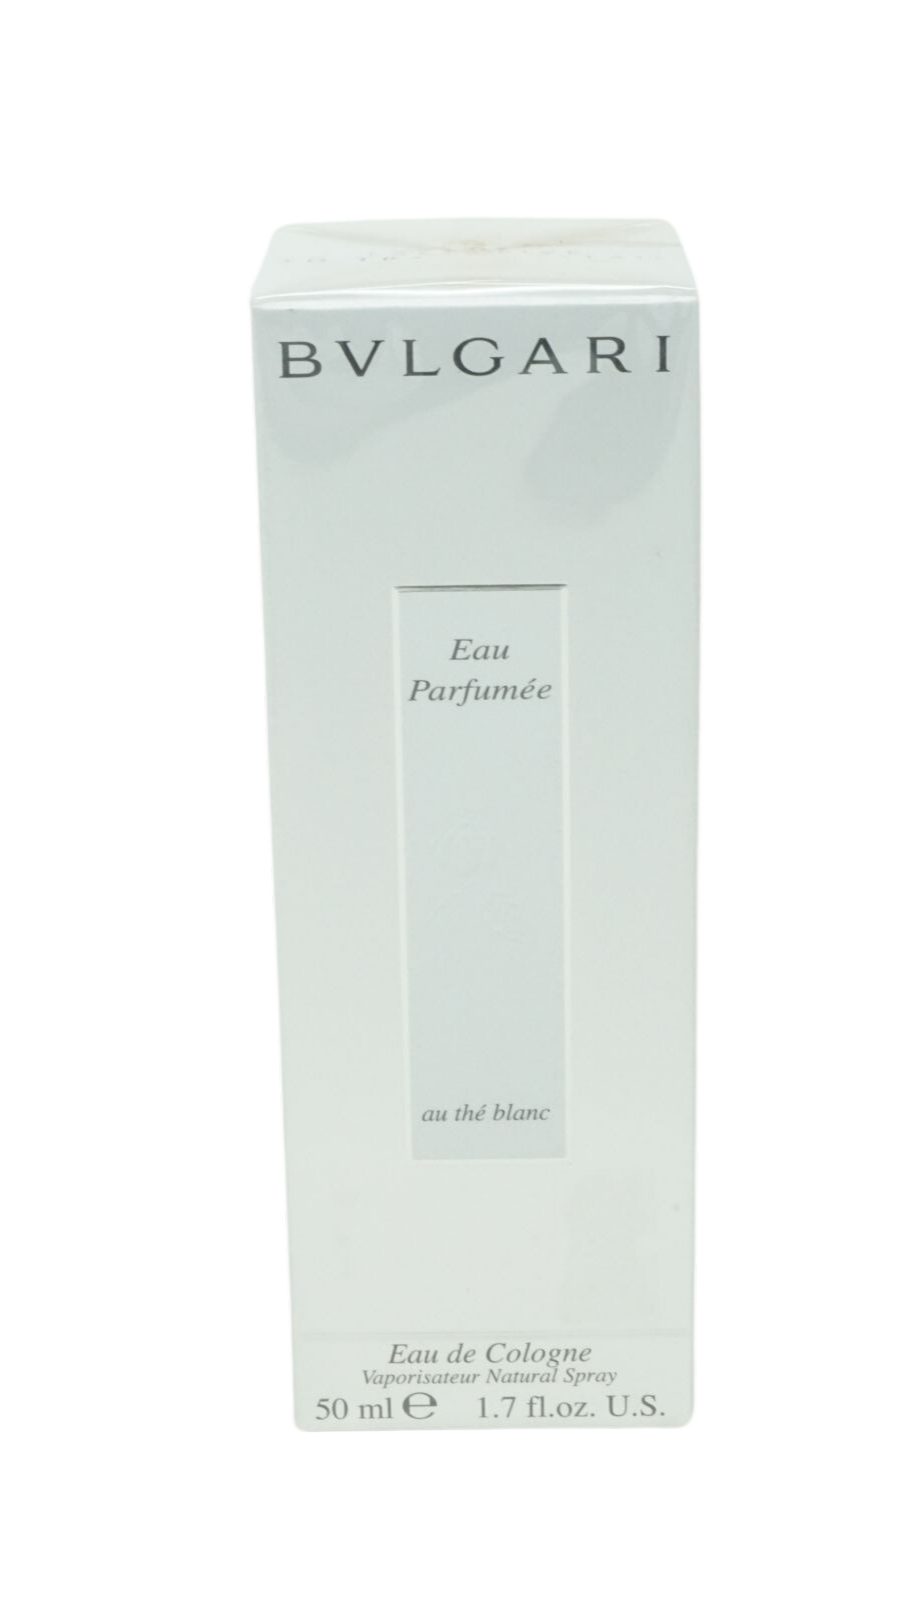 BVLGARI Cologne Au Blanc Parfumee de Eau BVLGARI de the Eau Cologne 50ml EAU